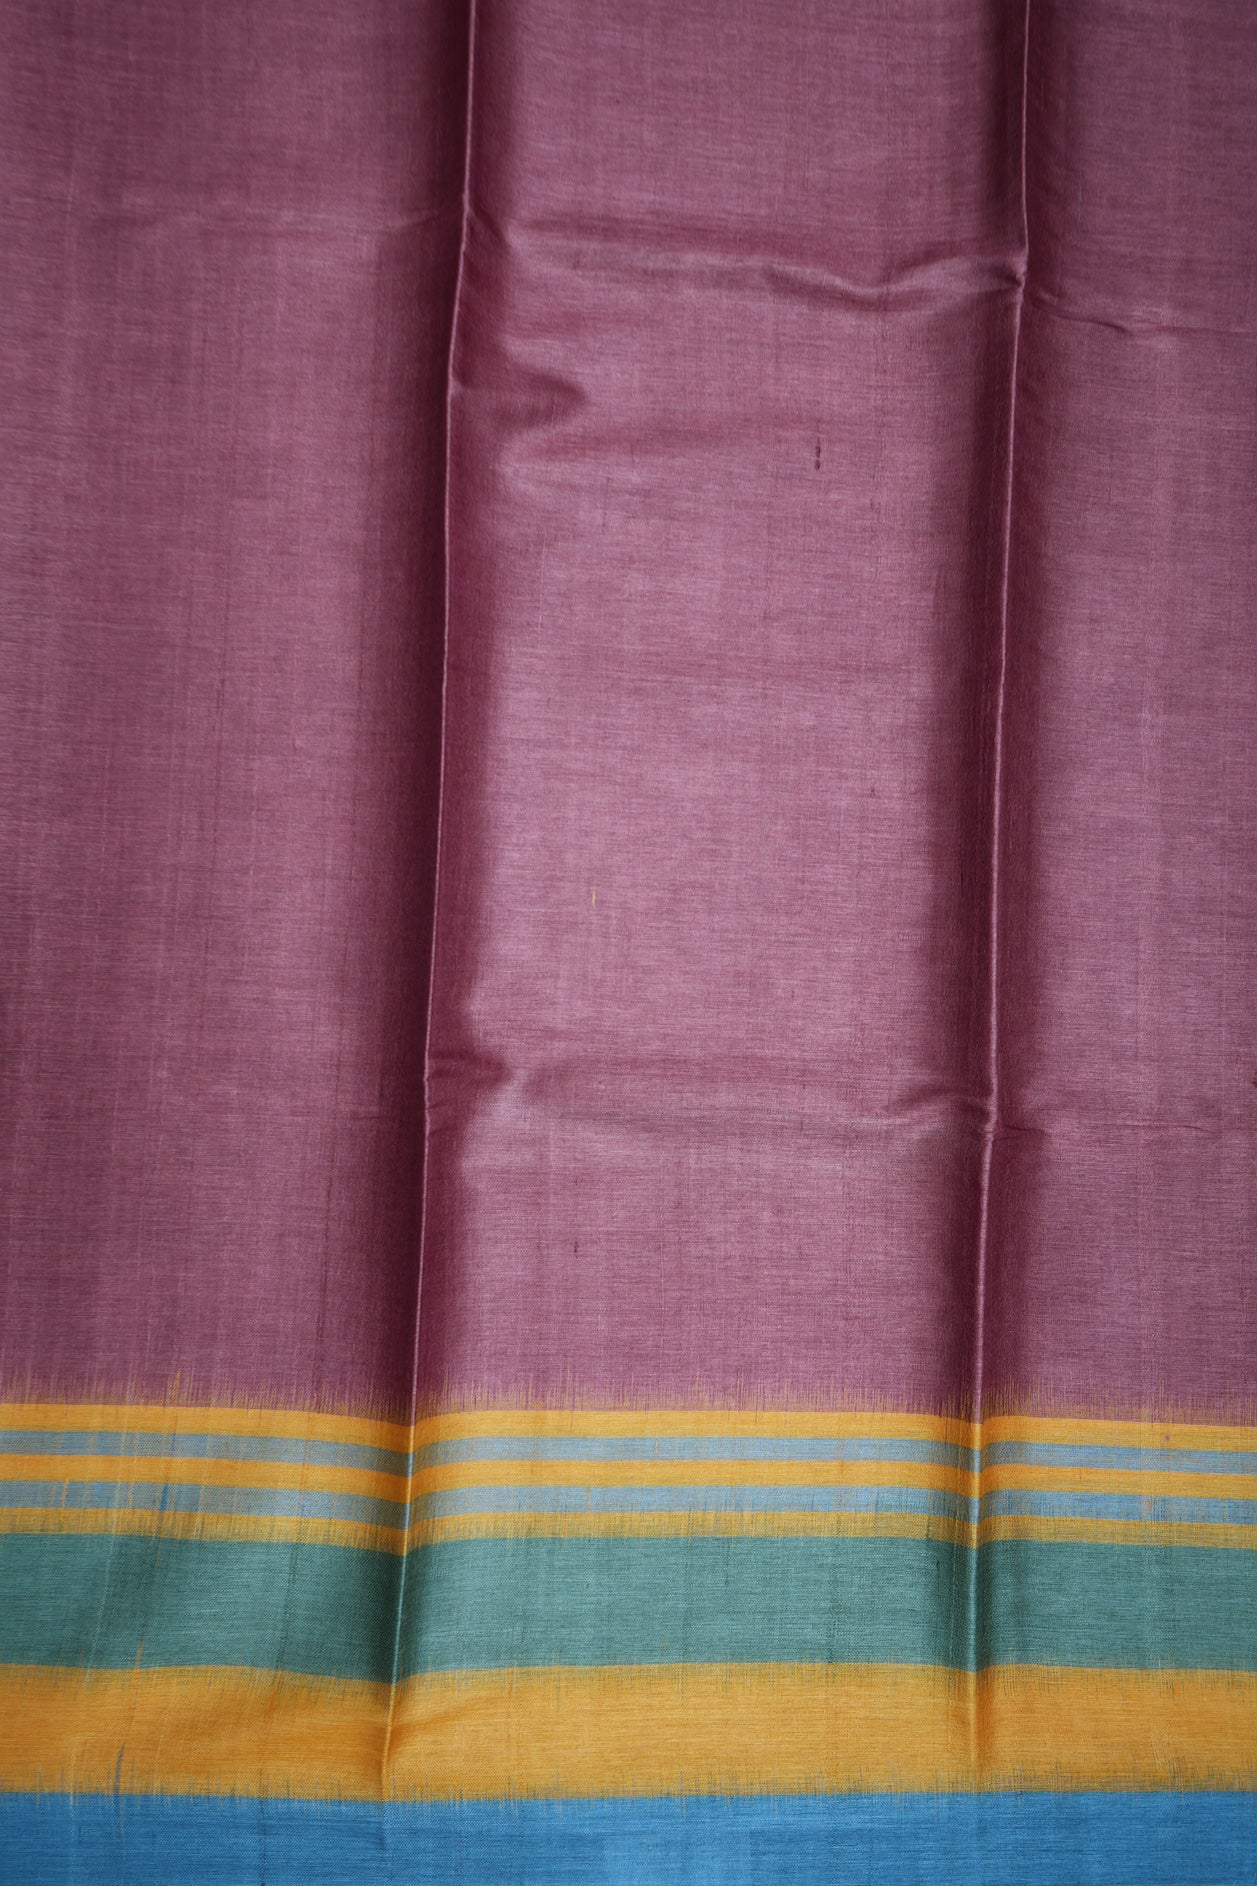 Multiclor Border With Plain Berry Purple Tussar Silk Saree